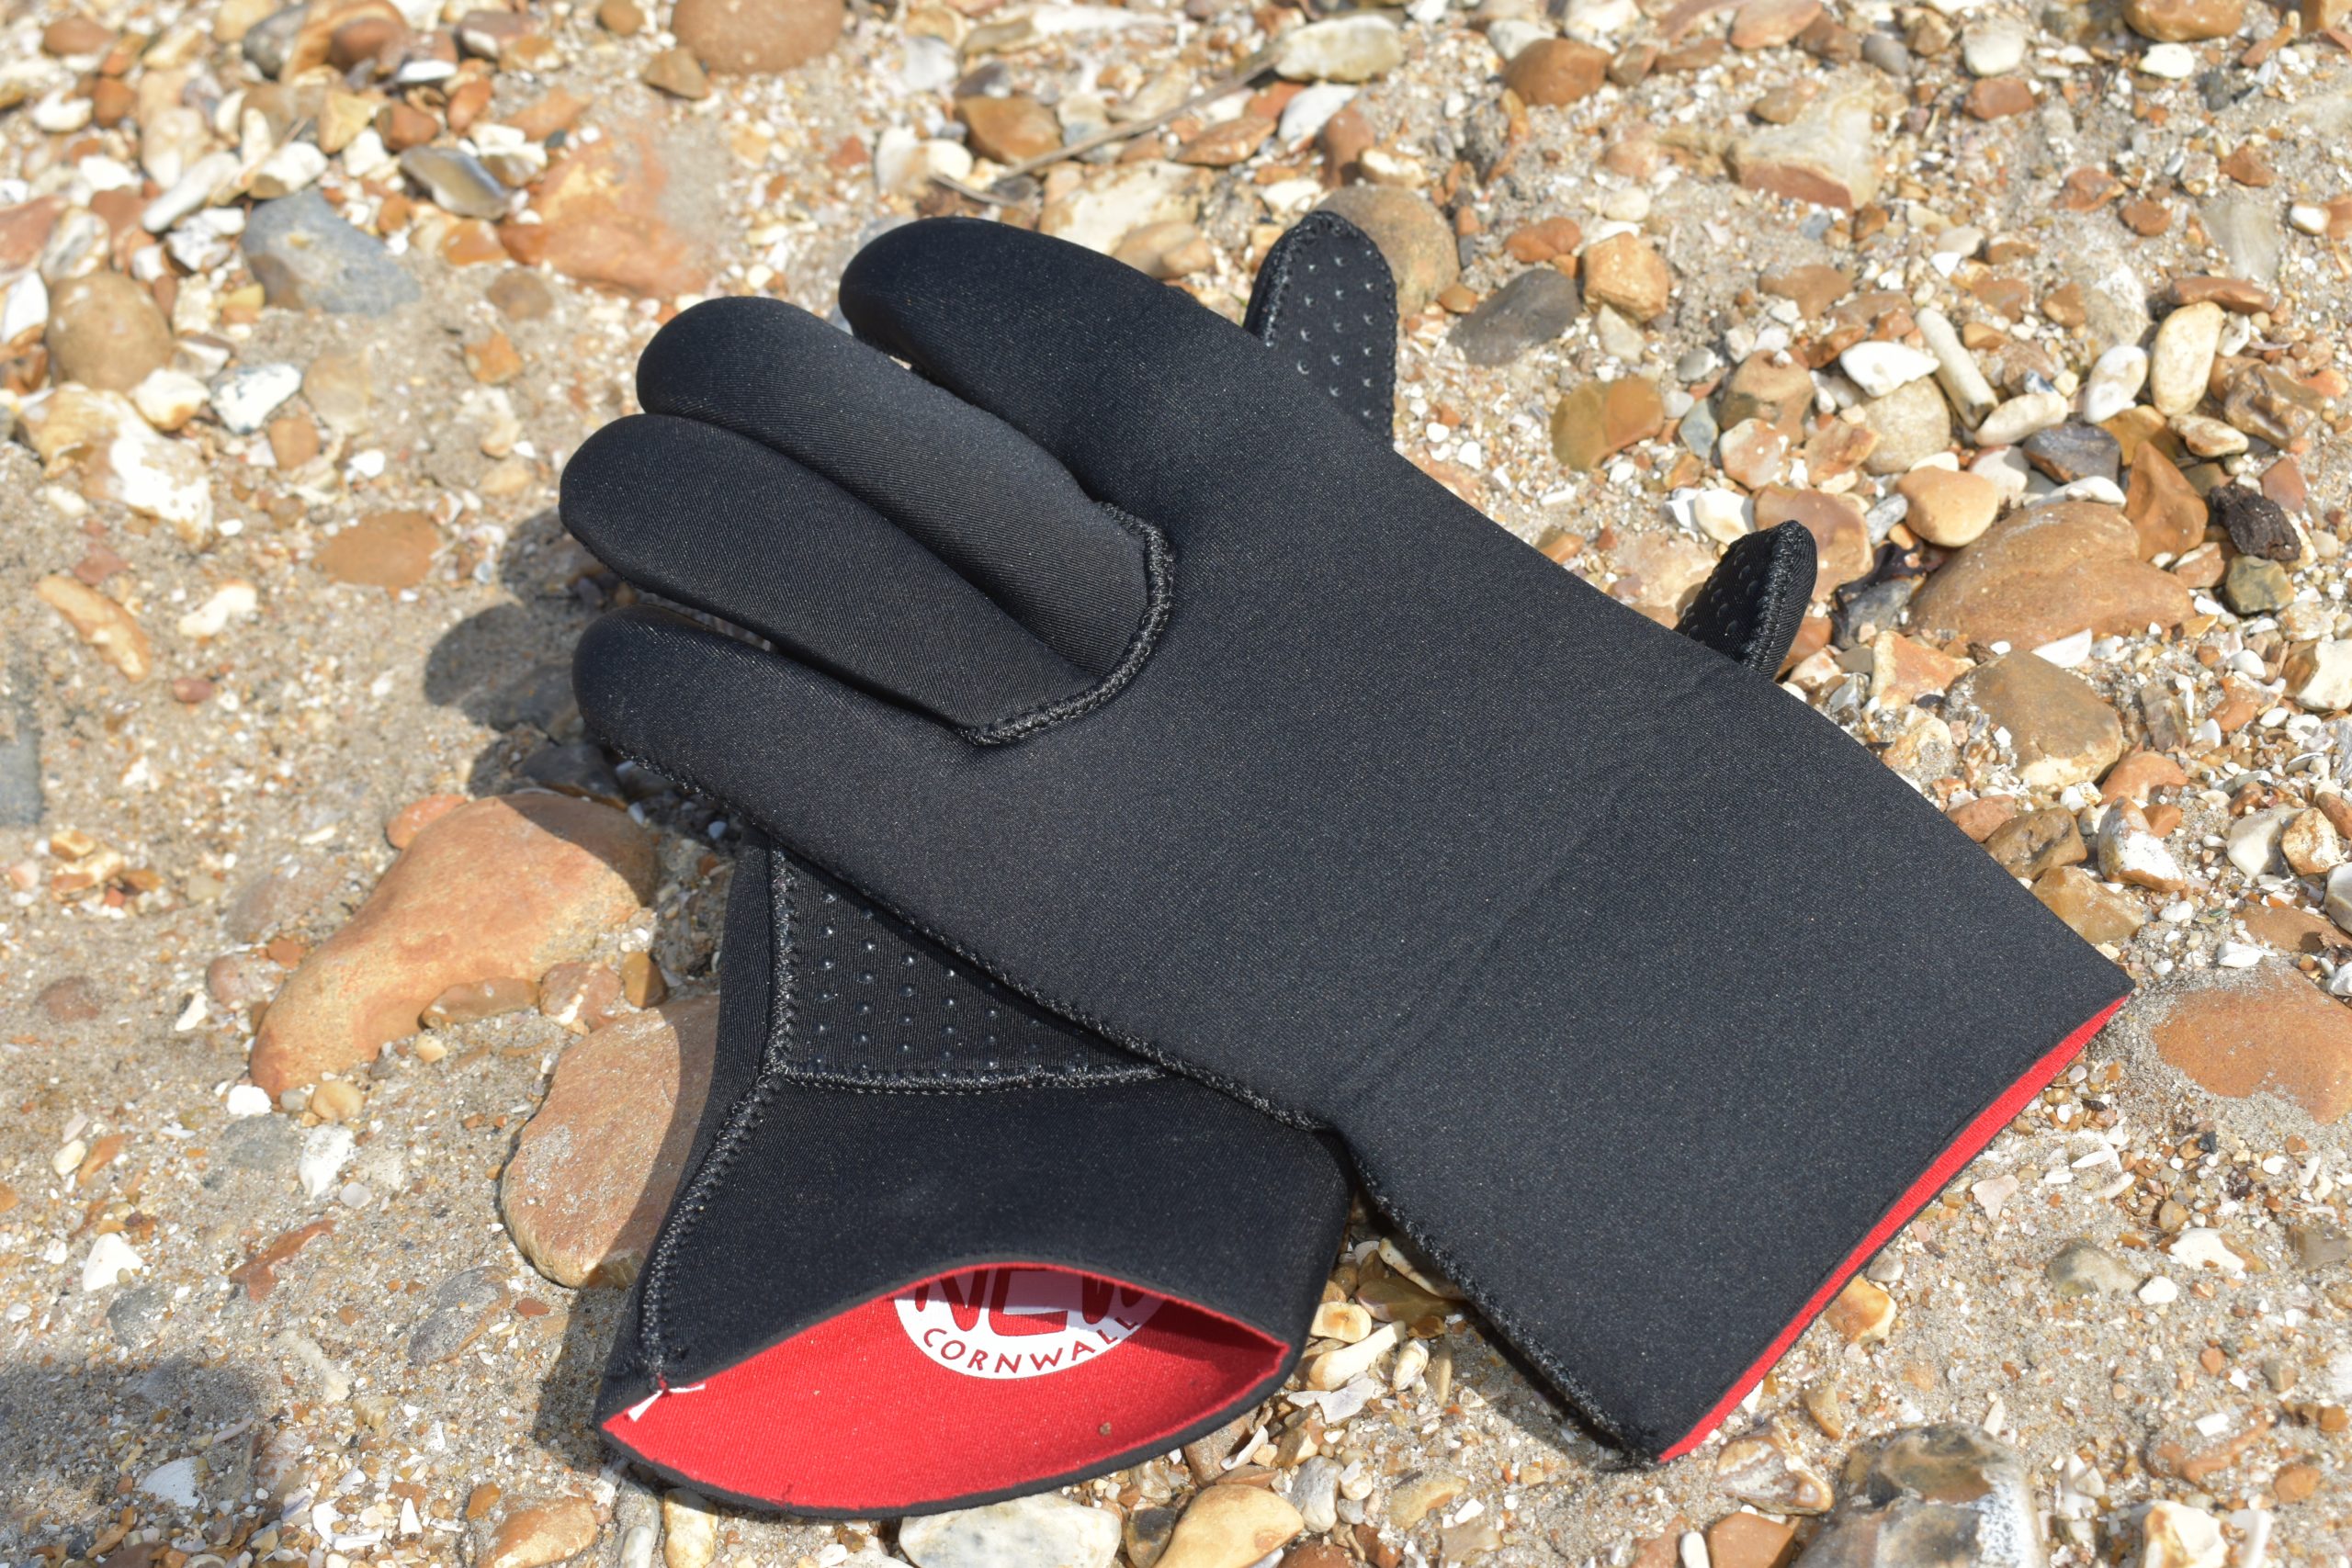 Titanium 3mm wetsuit gloves Stretchy neoprene warm Sizes S,M,L,XL UK seller 